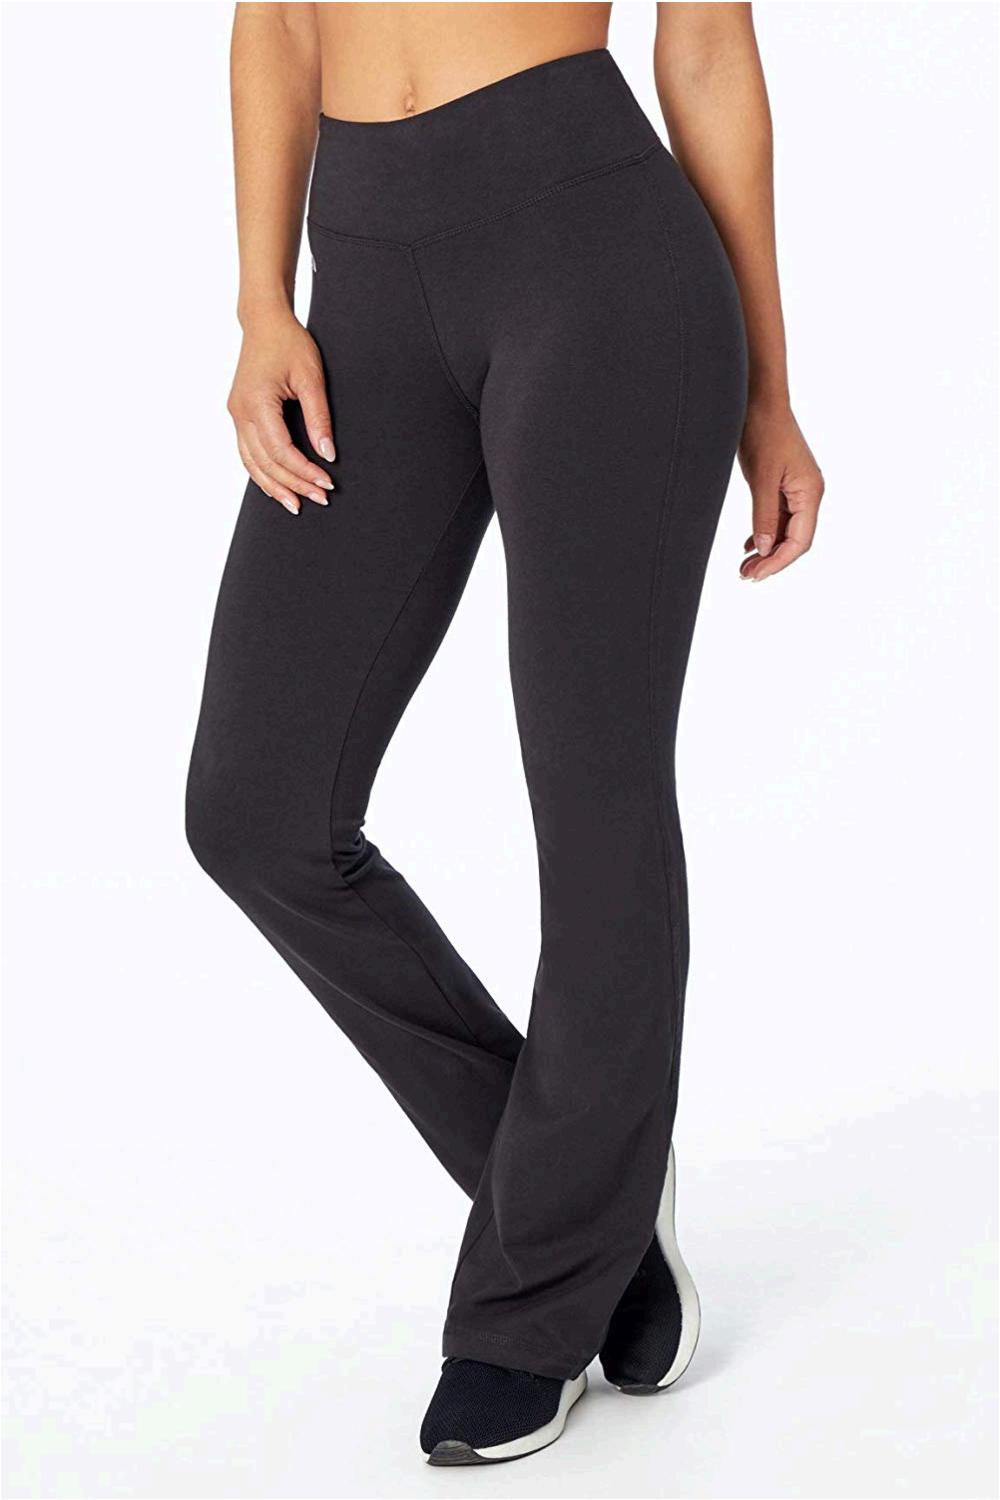 Marika Tek Jordan Foil-Inset Leggings, Black | Pants for women, Black,  Leggings